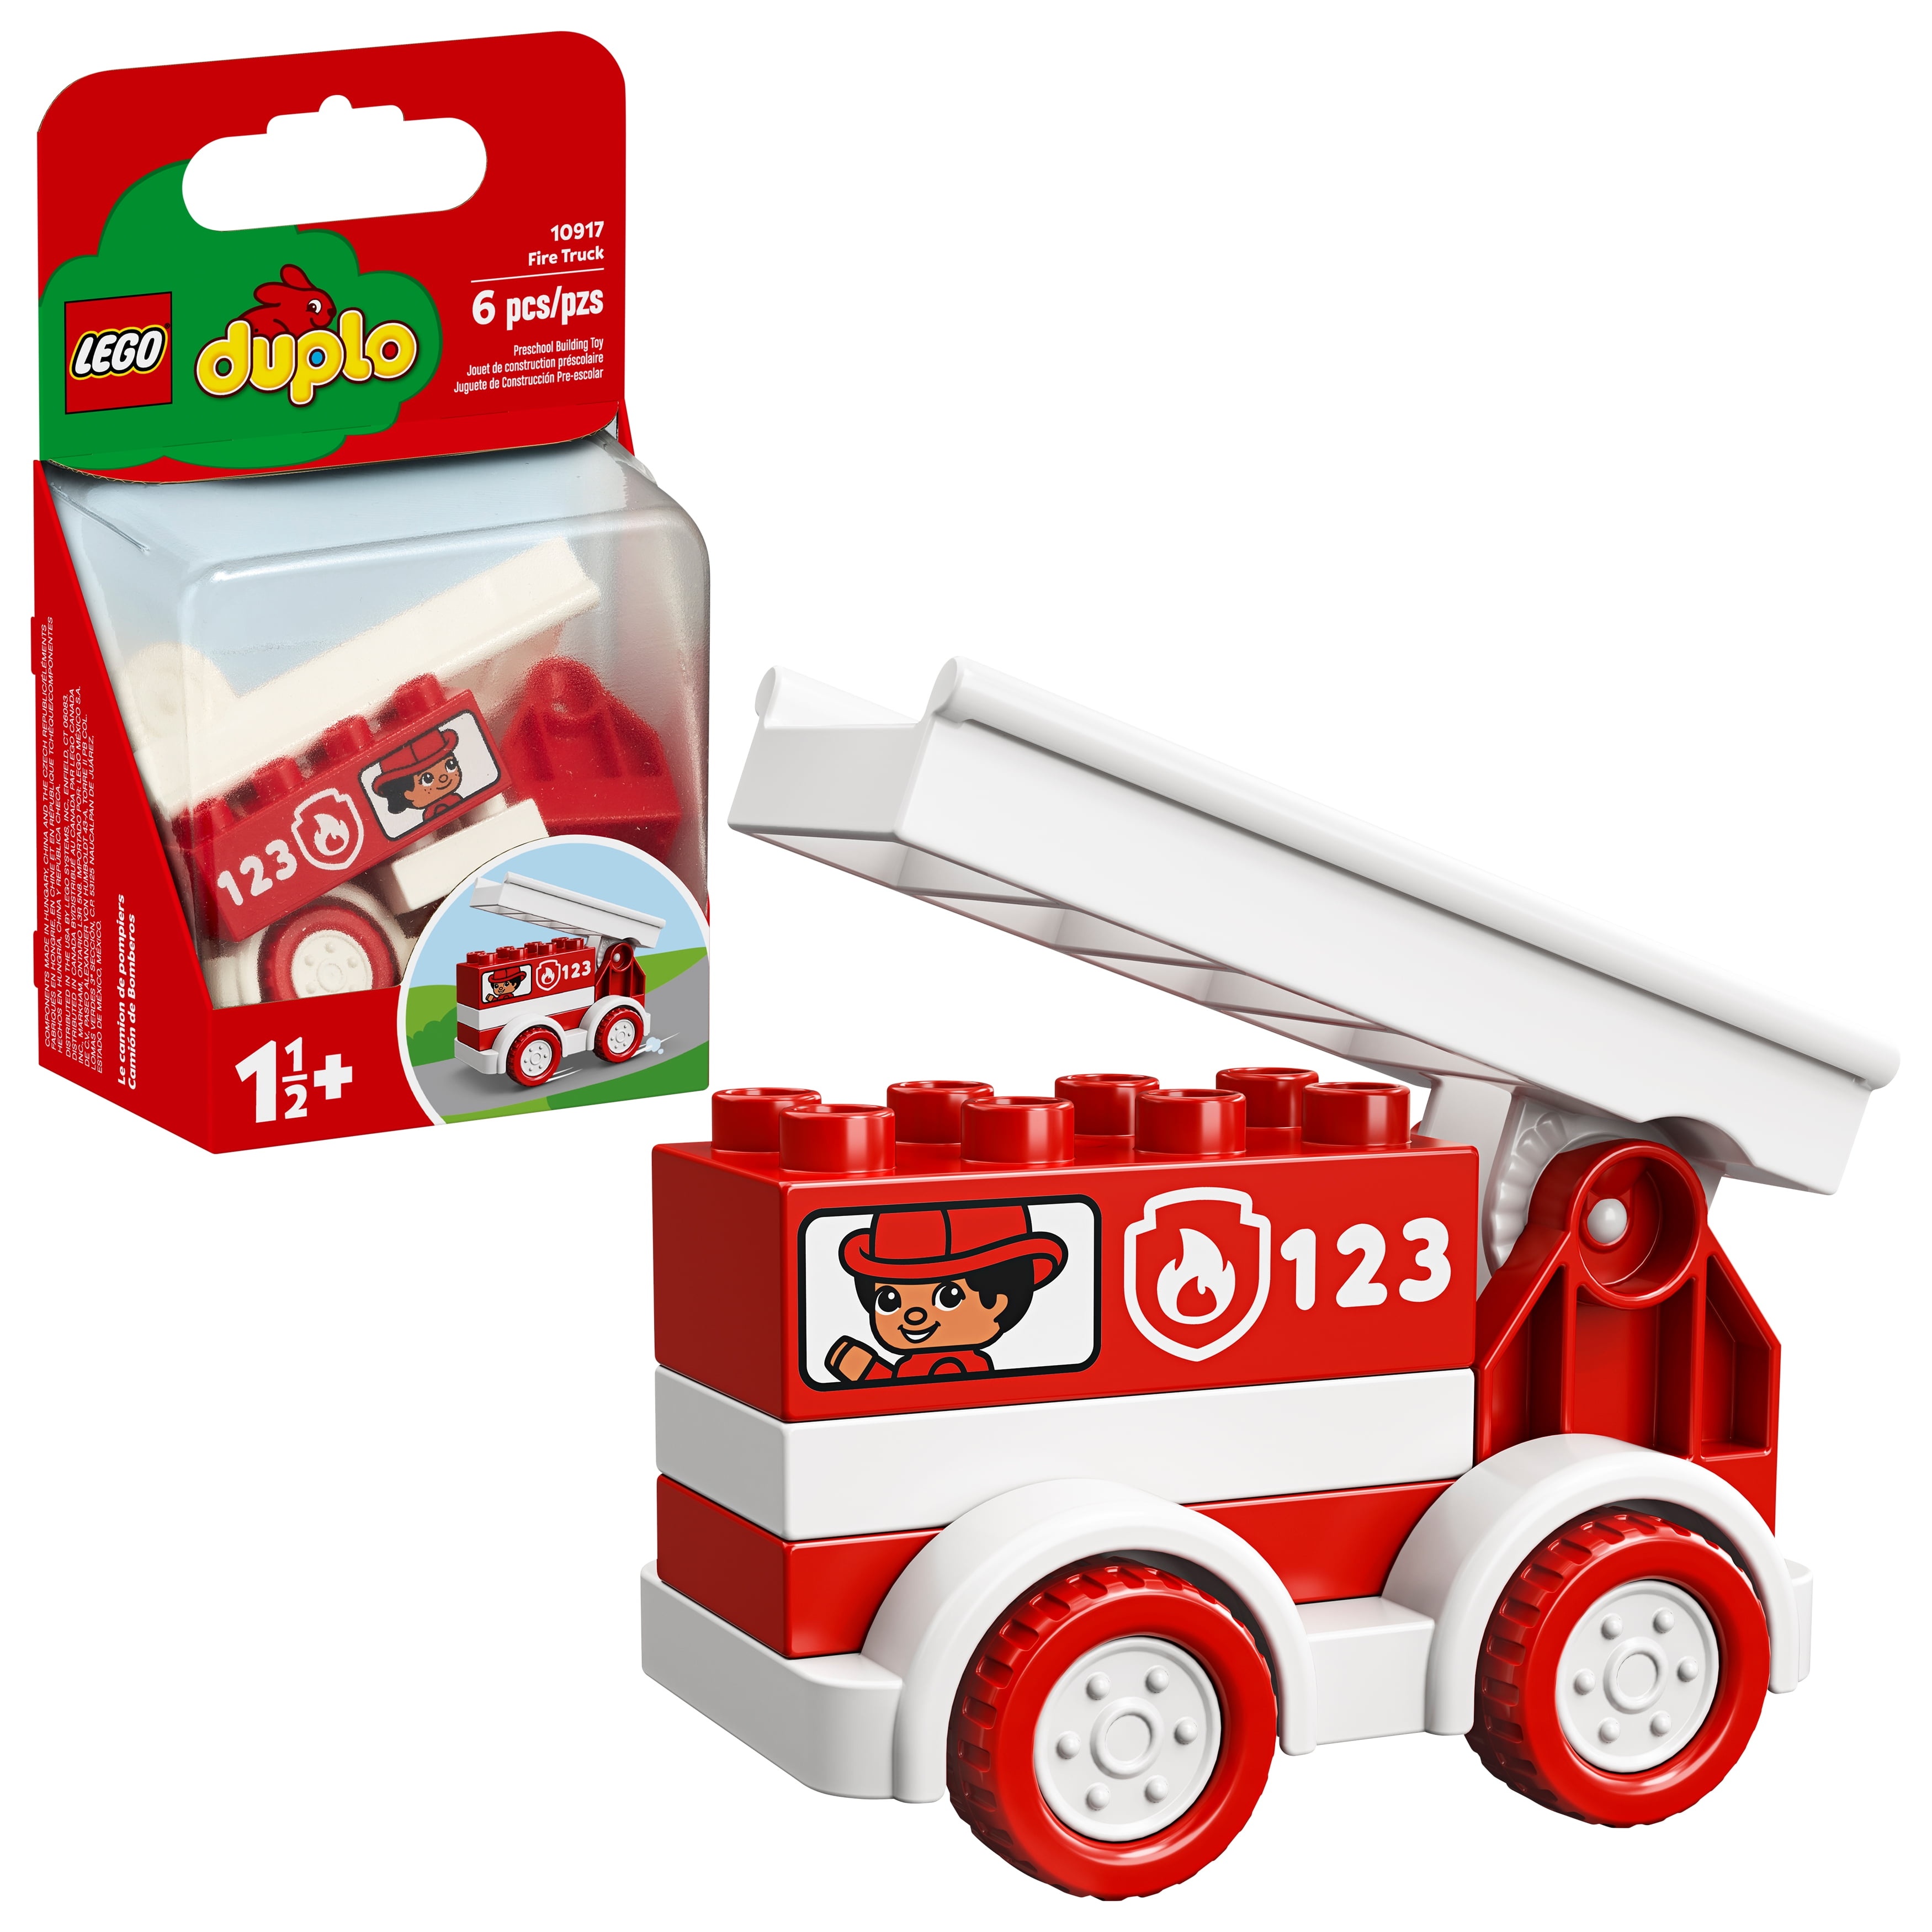 LEGO Duplo 10930 Radlader Bulldozer N7/20 